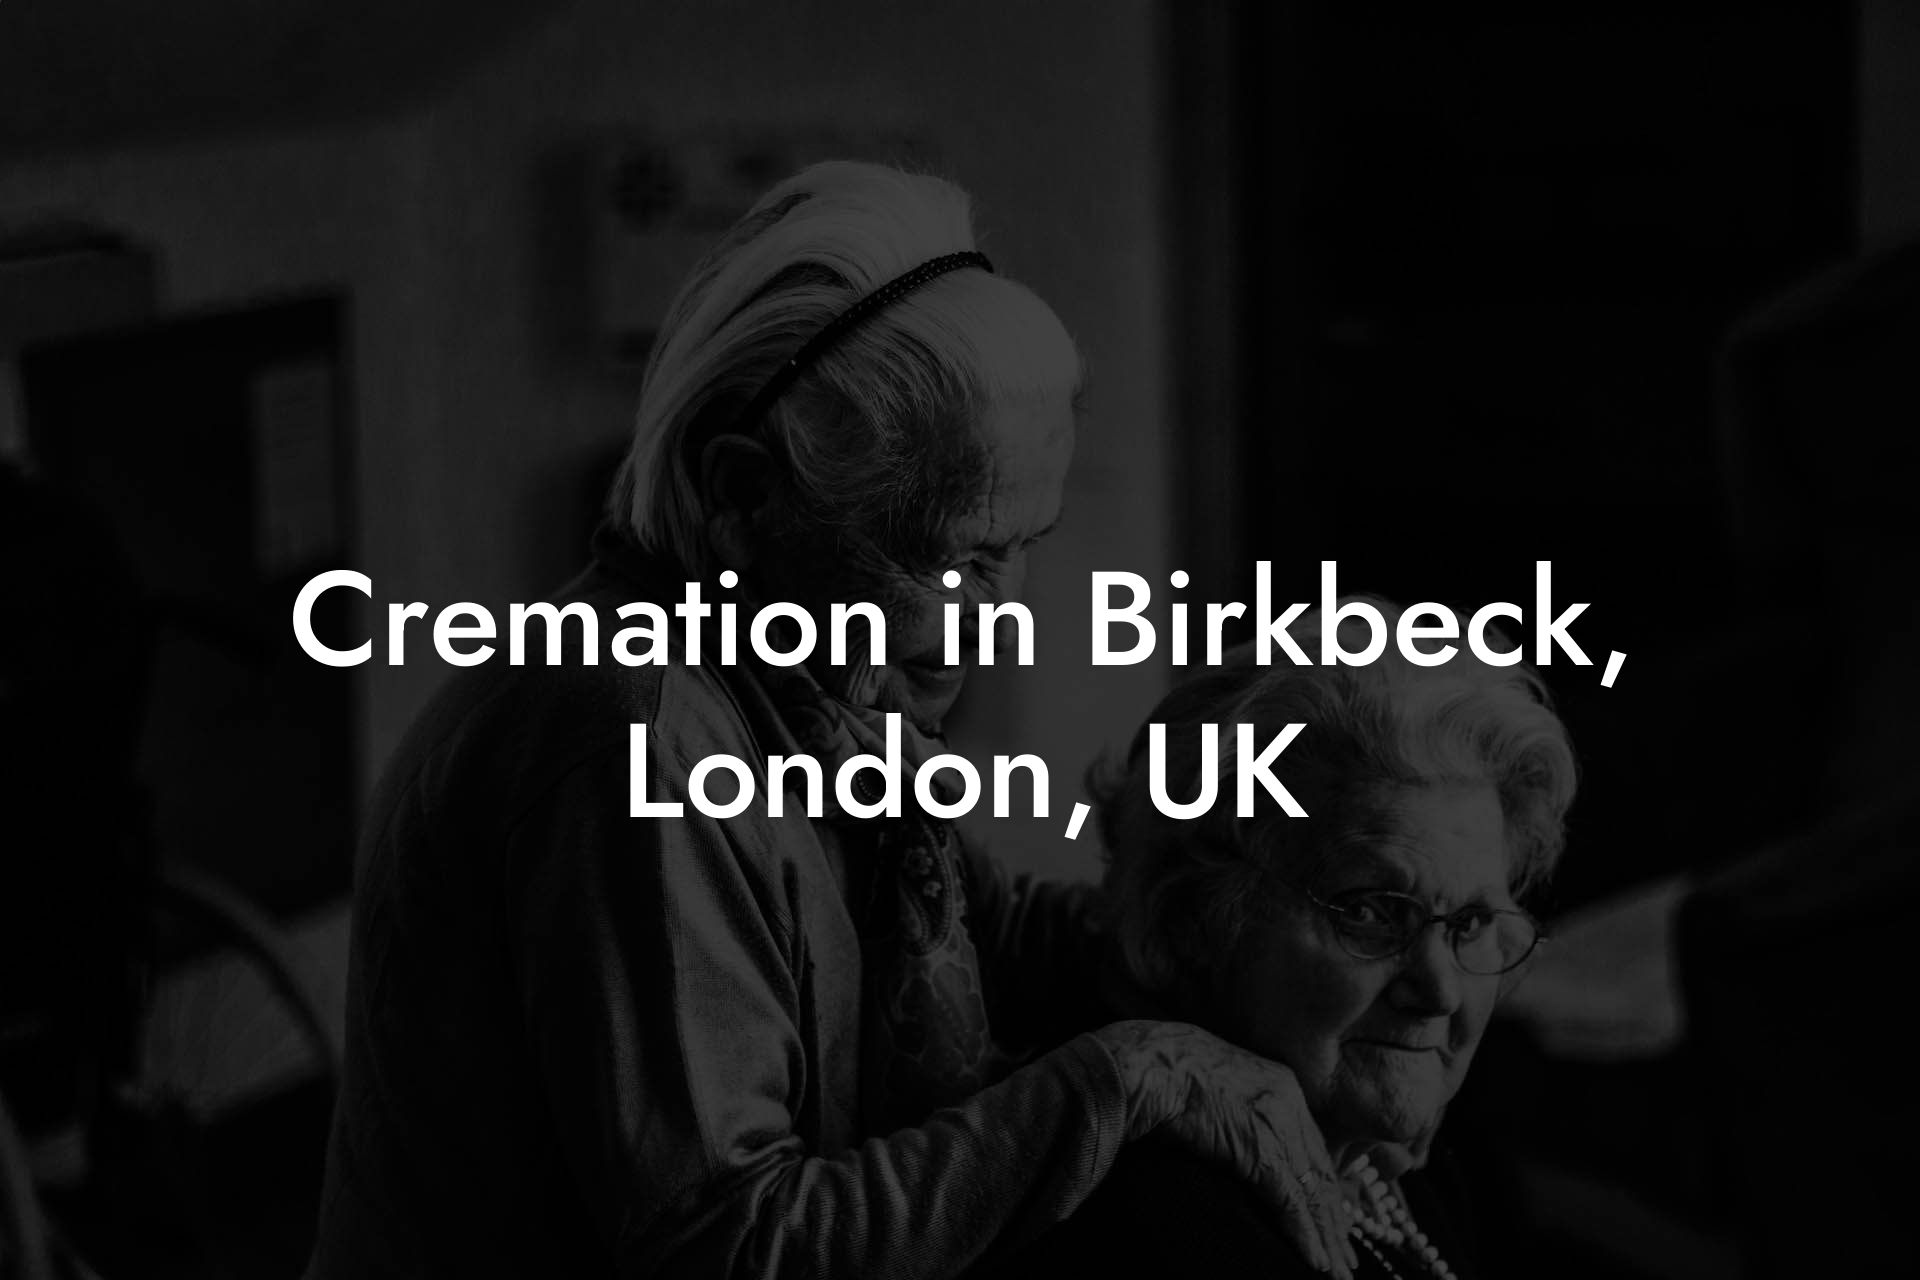 Cremation in Birkbeck, London, UK